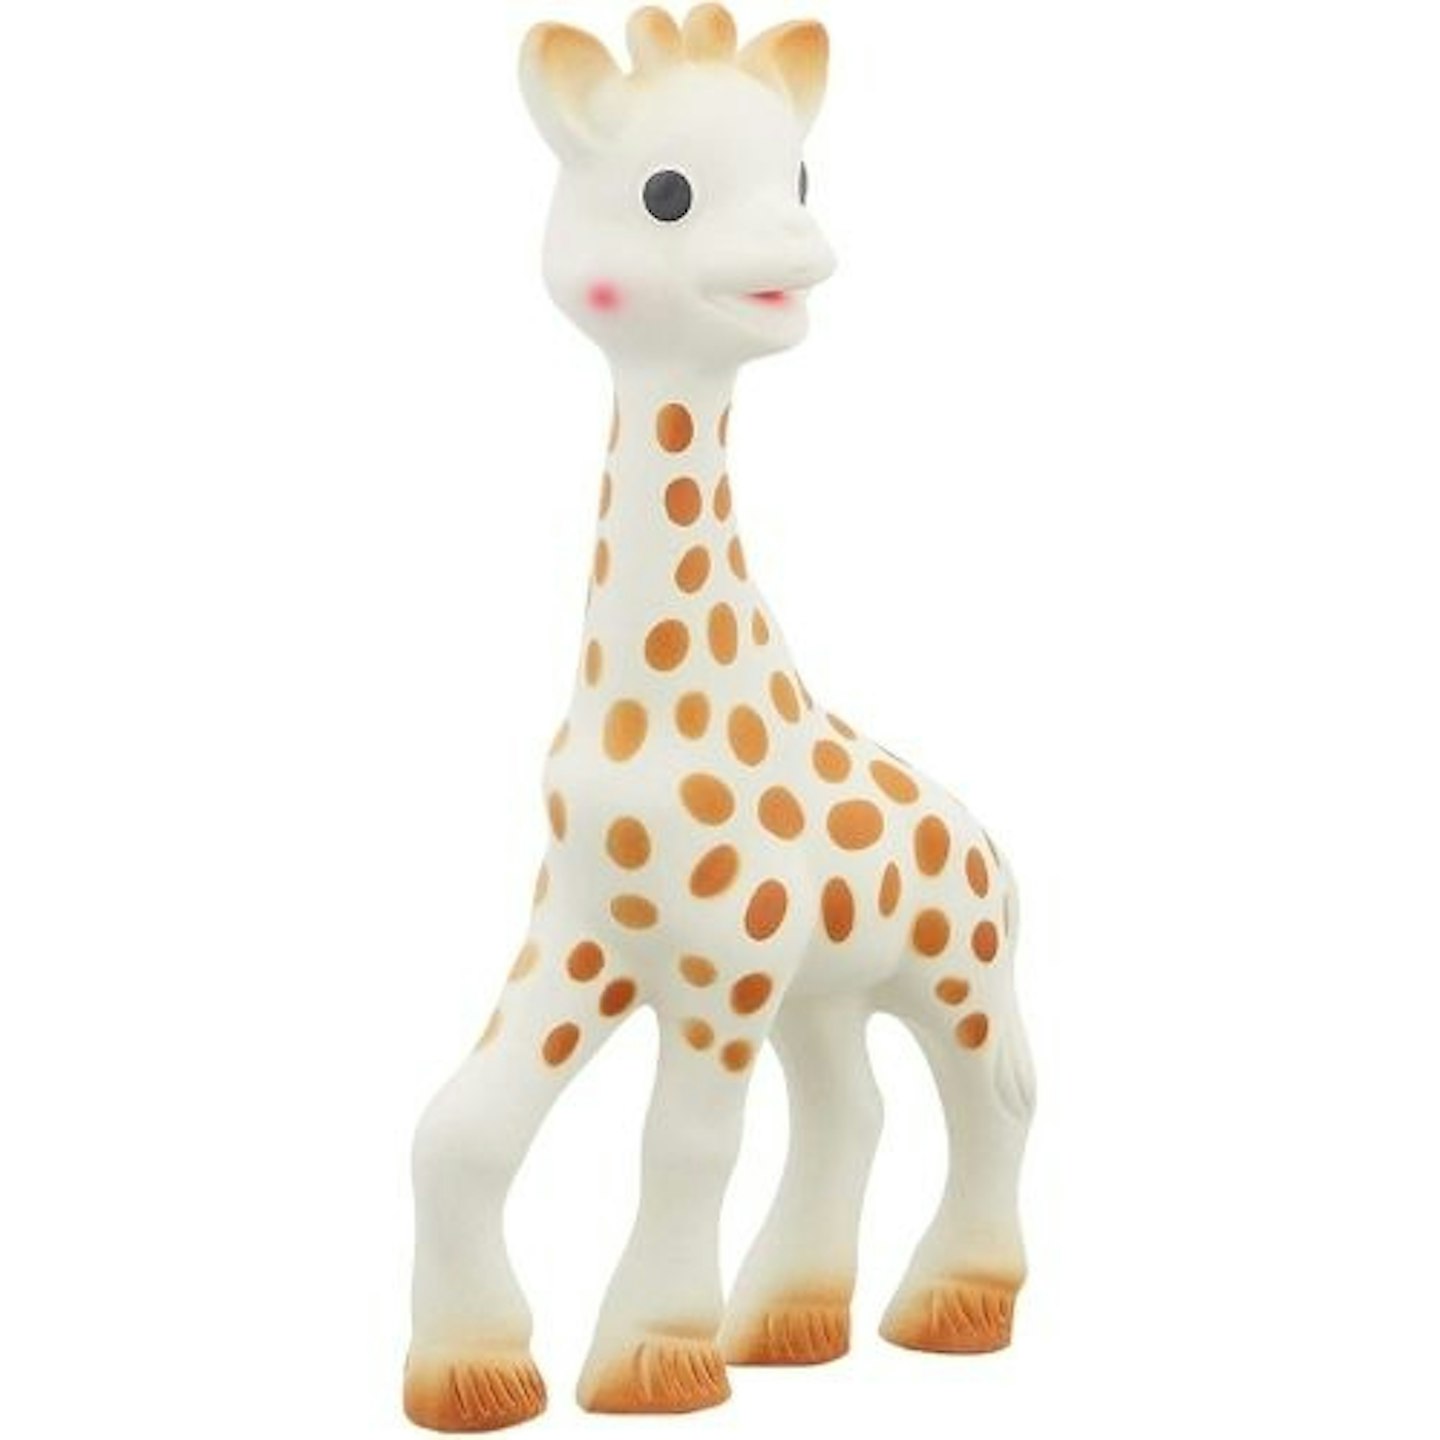 Sophie La Girafe Baby Teething Toy - Baby shower gift